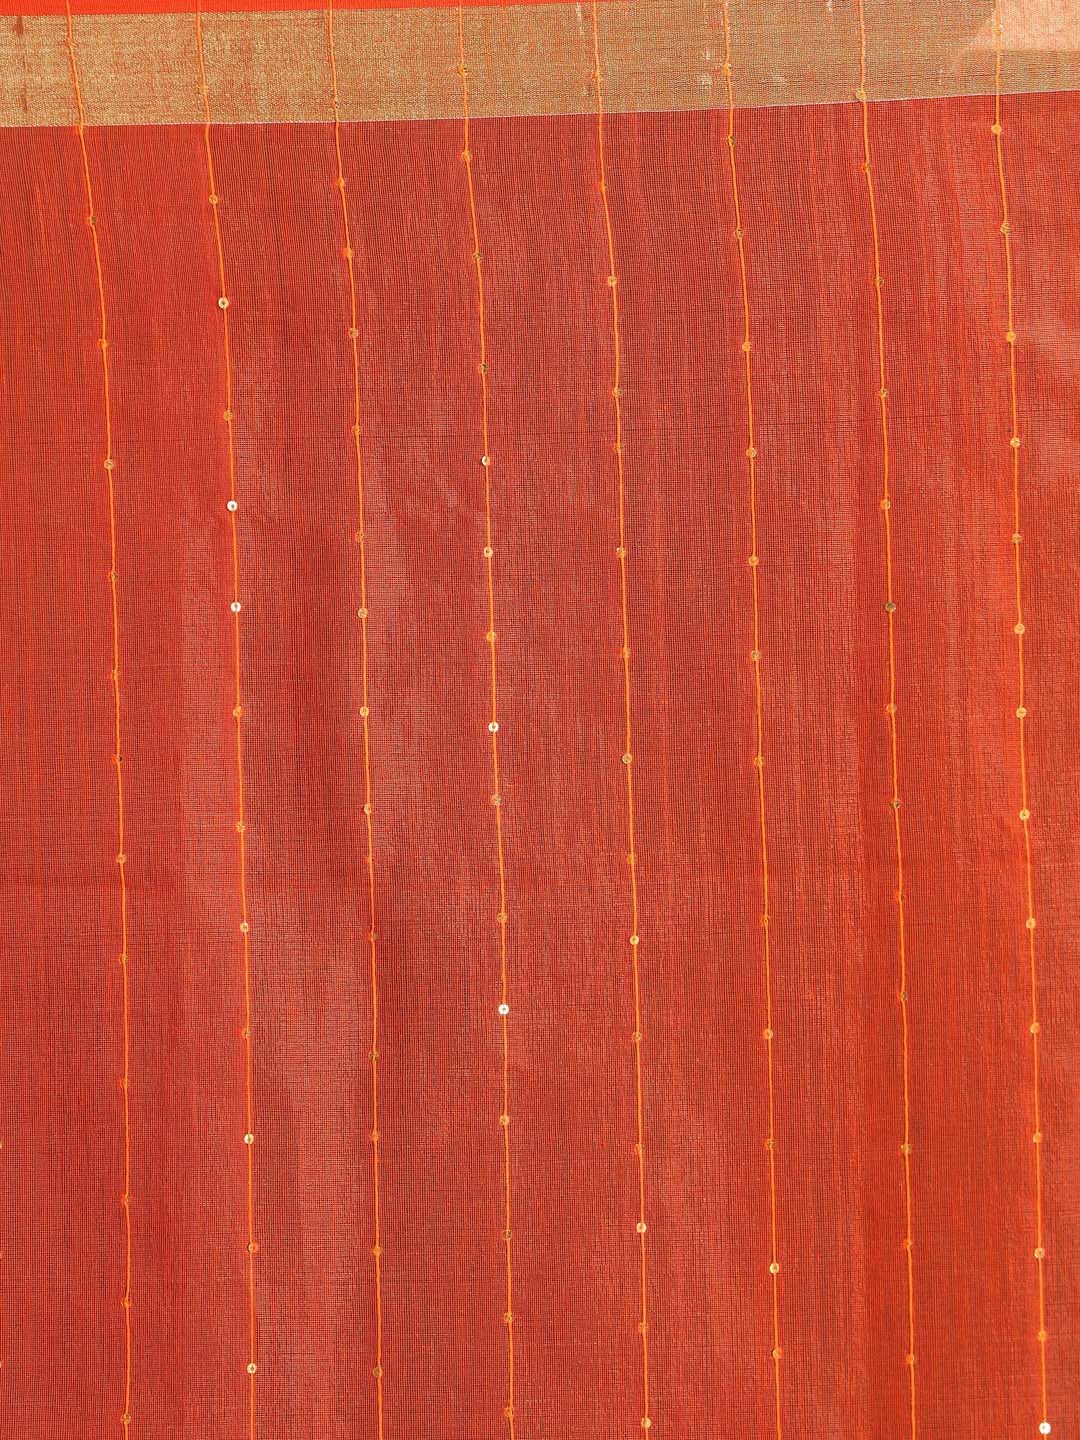 Indethnic Orange Bengal Handloom Cotton Blend Work Saree - Saree Detail View